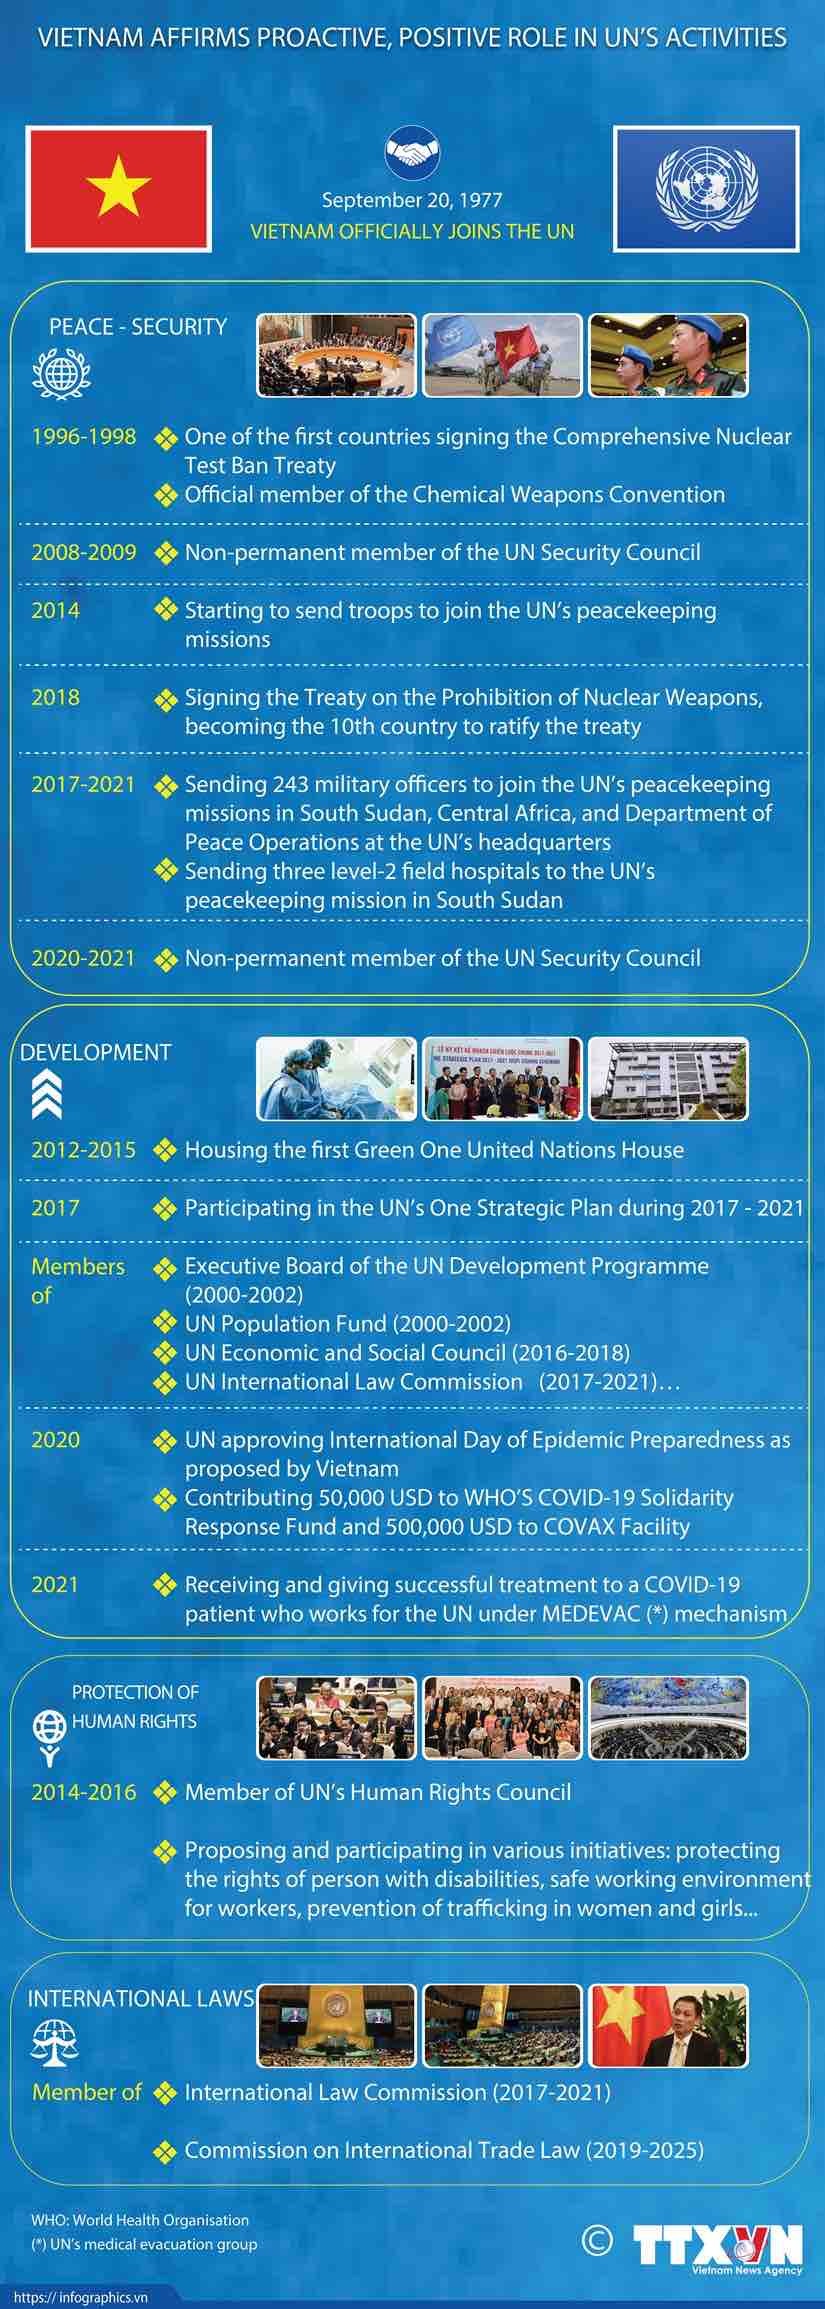 Viet Nam affirms proactive, positive role in UN's activities